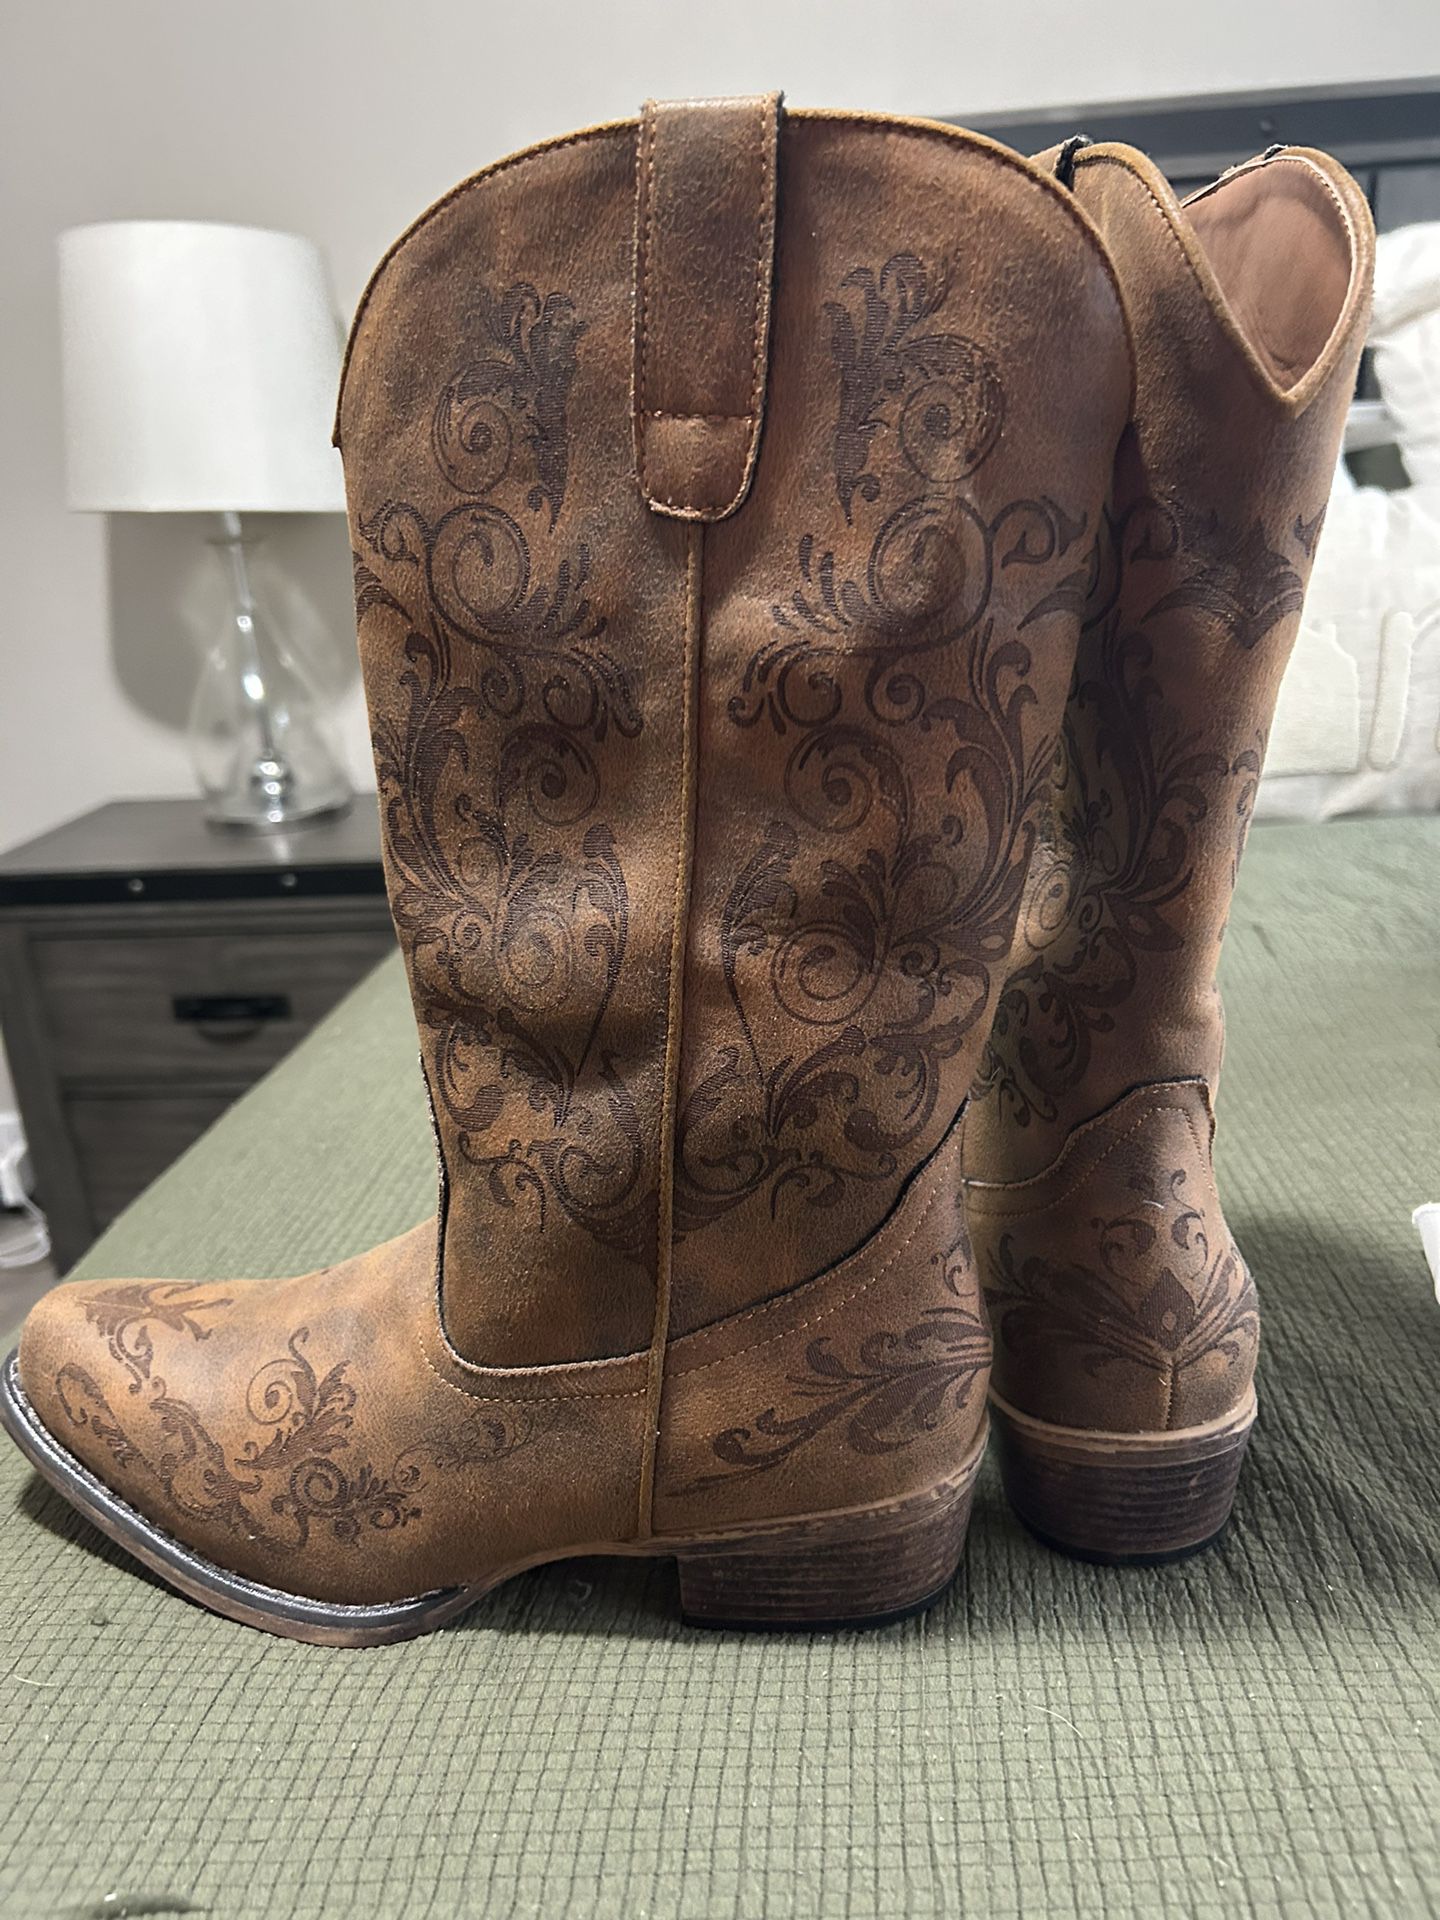 Roper Women’s boots